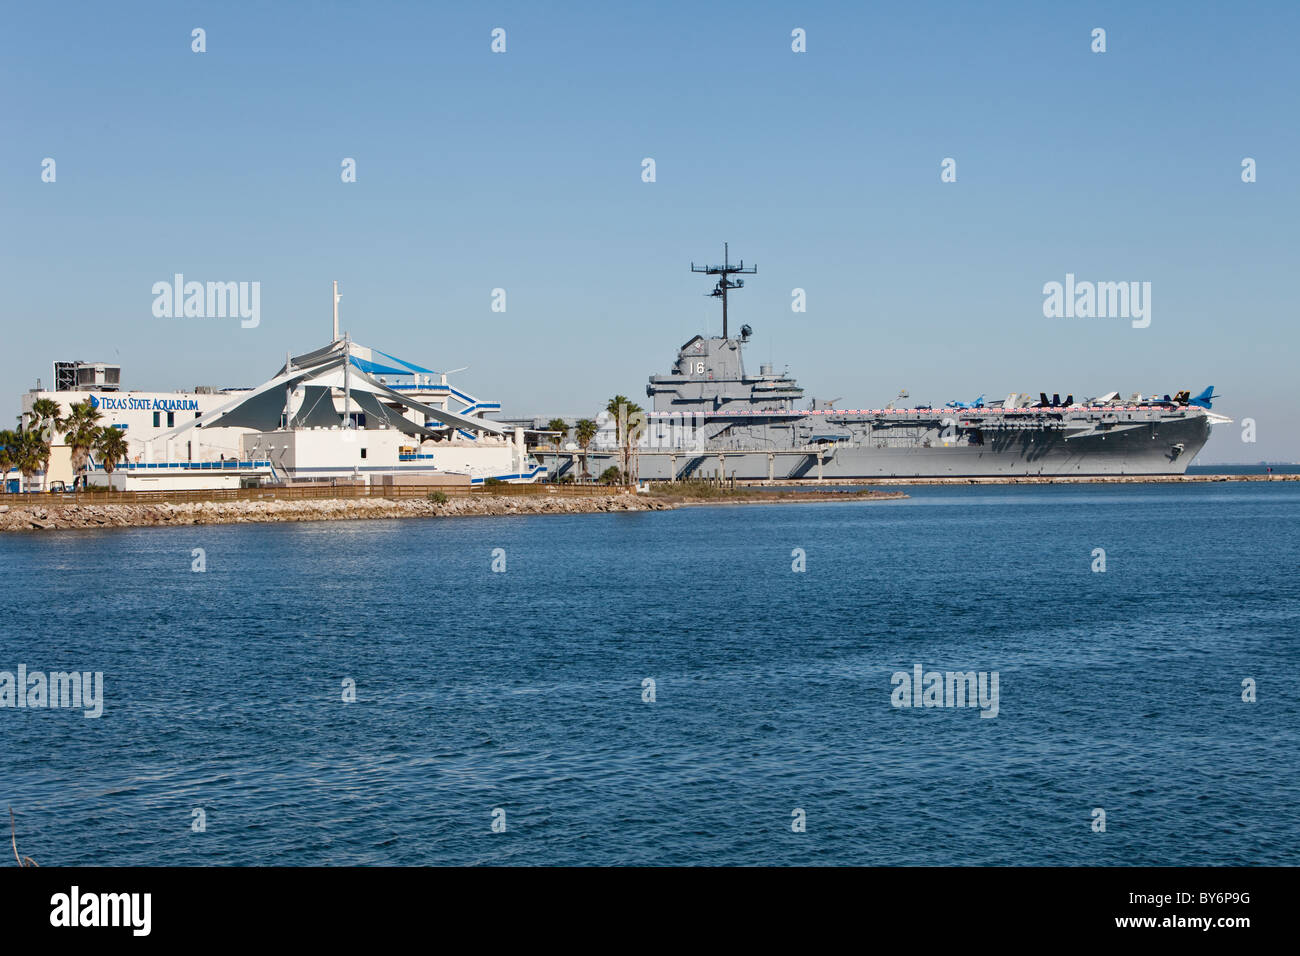 Texas State Aquarium & USS Lexington CV16, Stock Photo